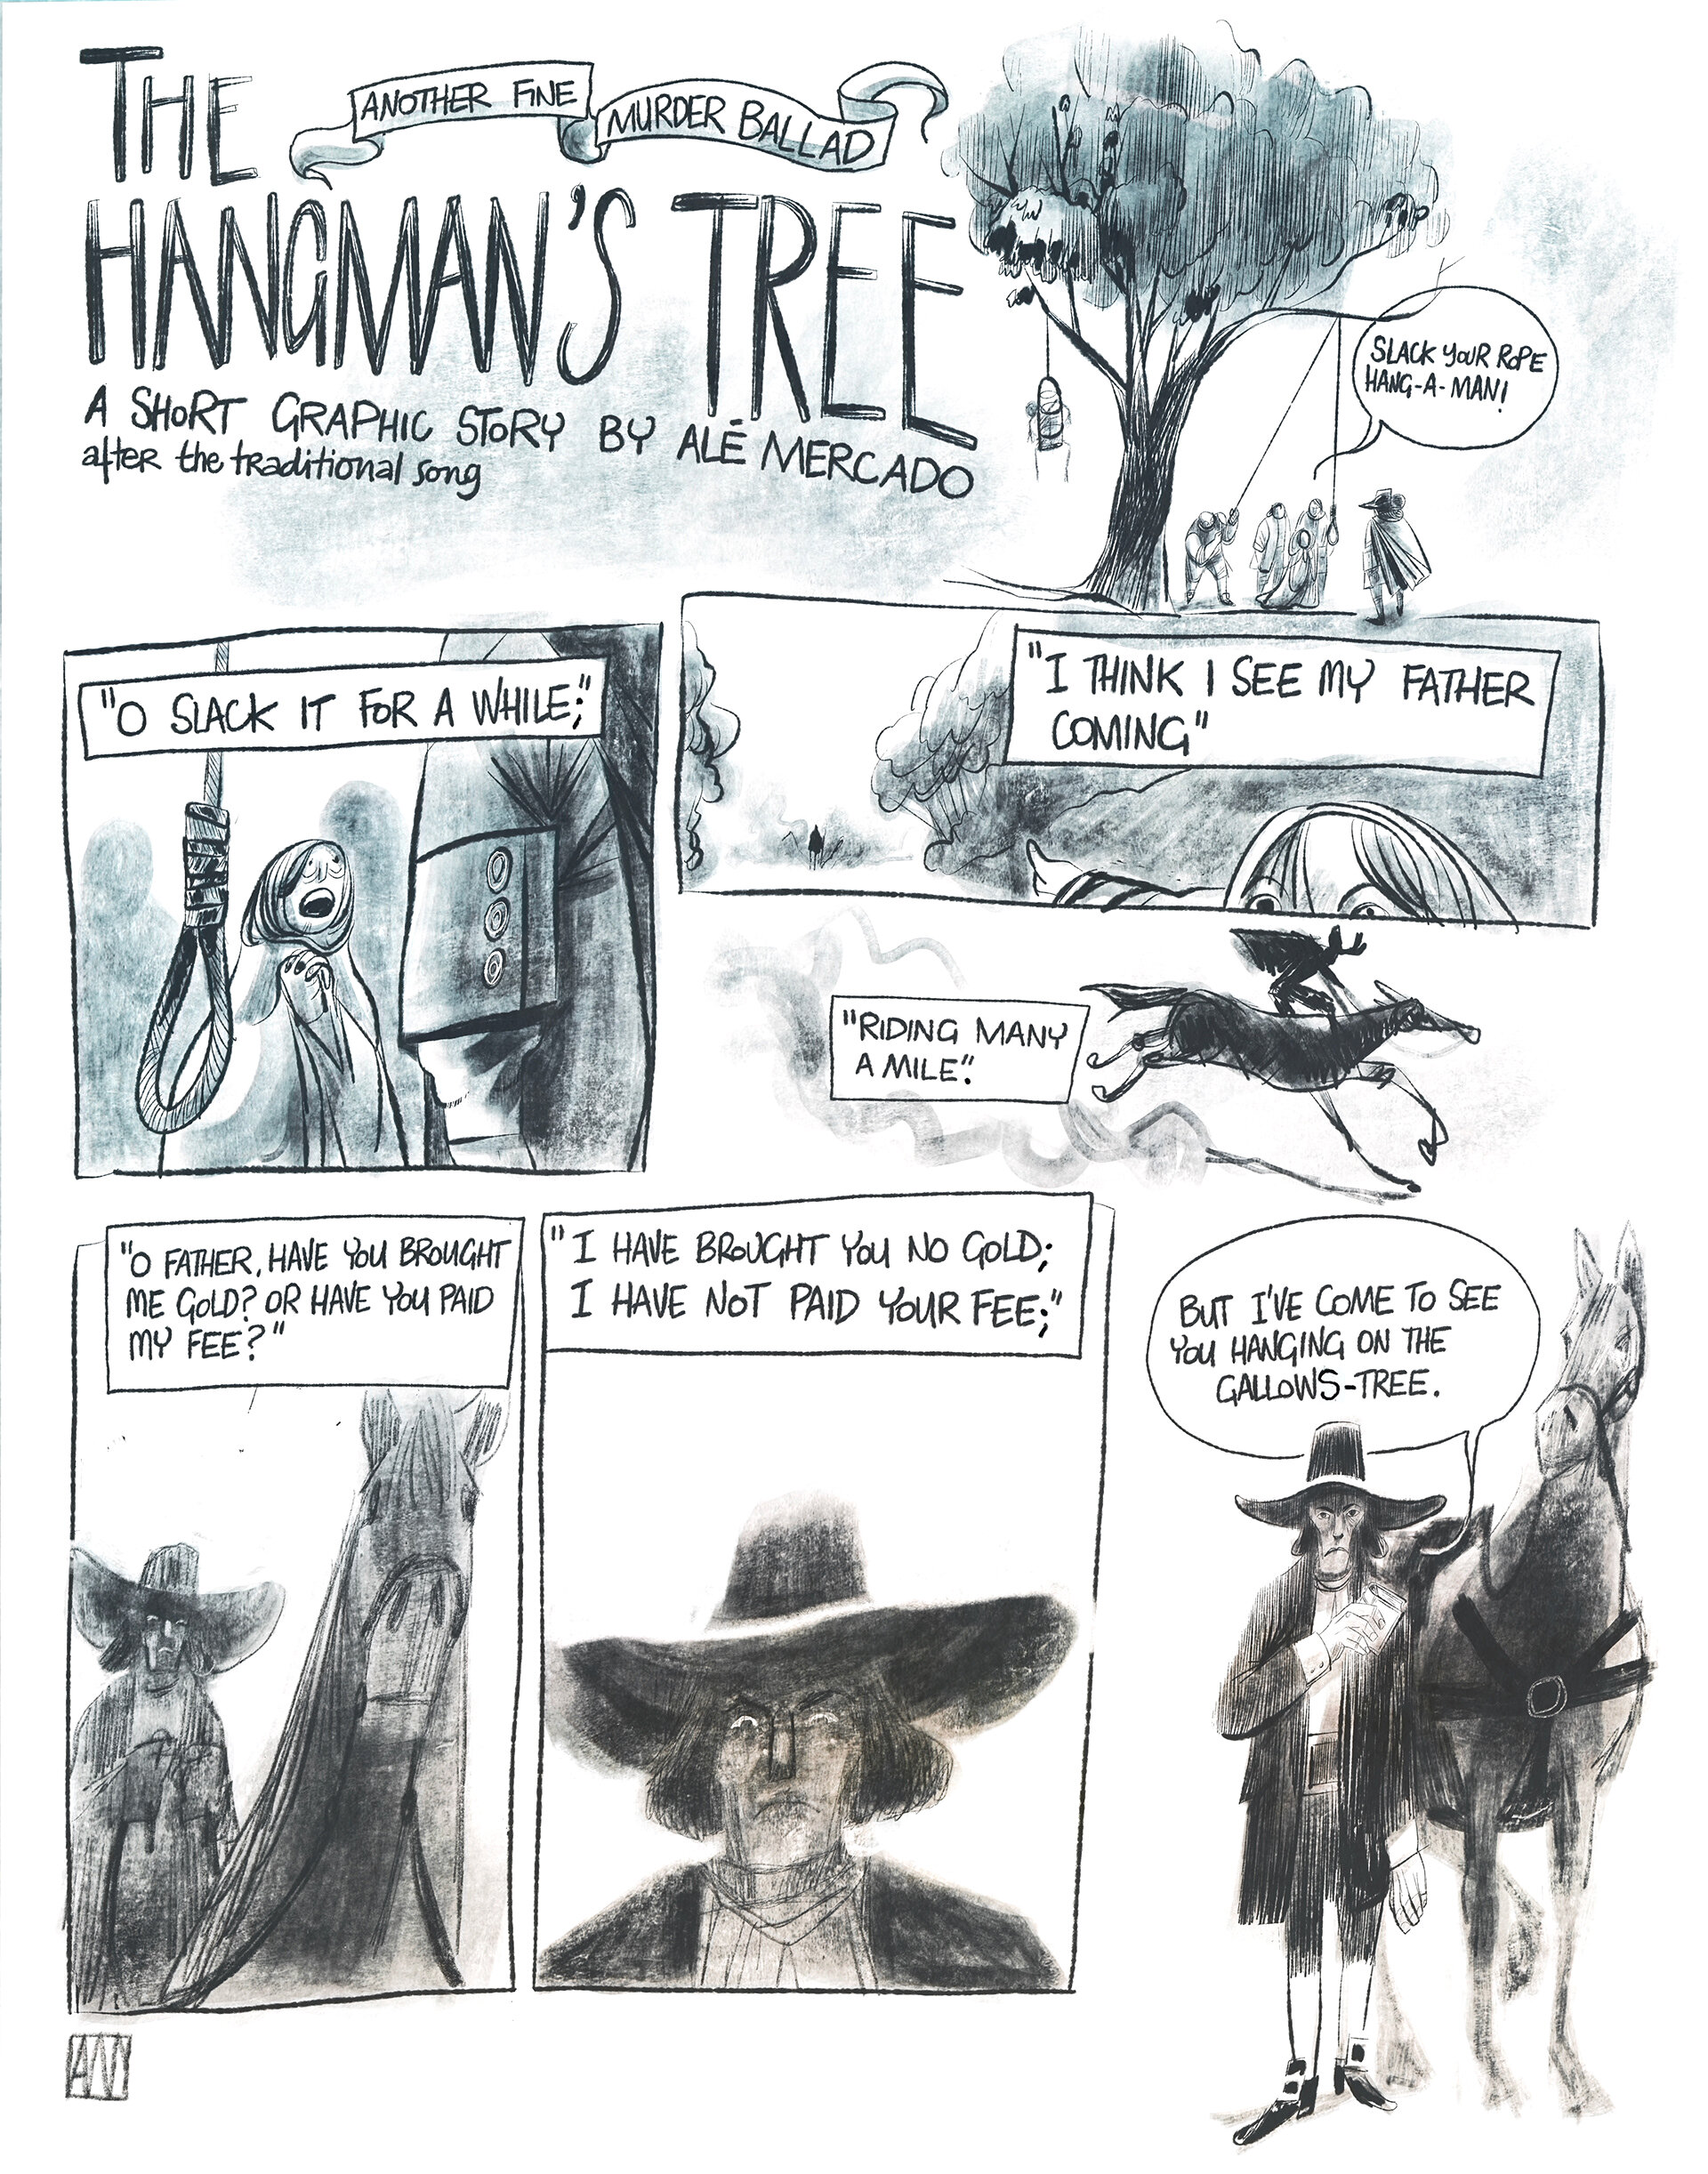 Comic] The Hangman's Tree —